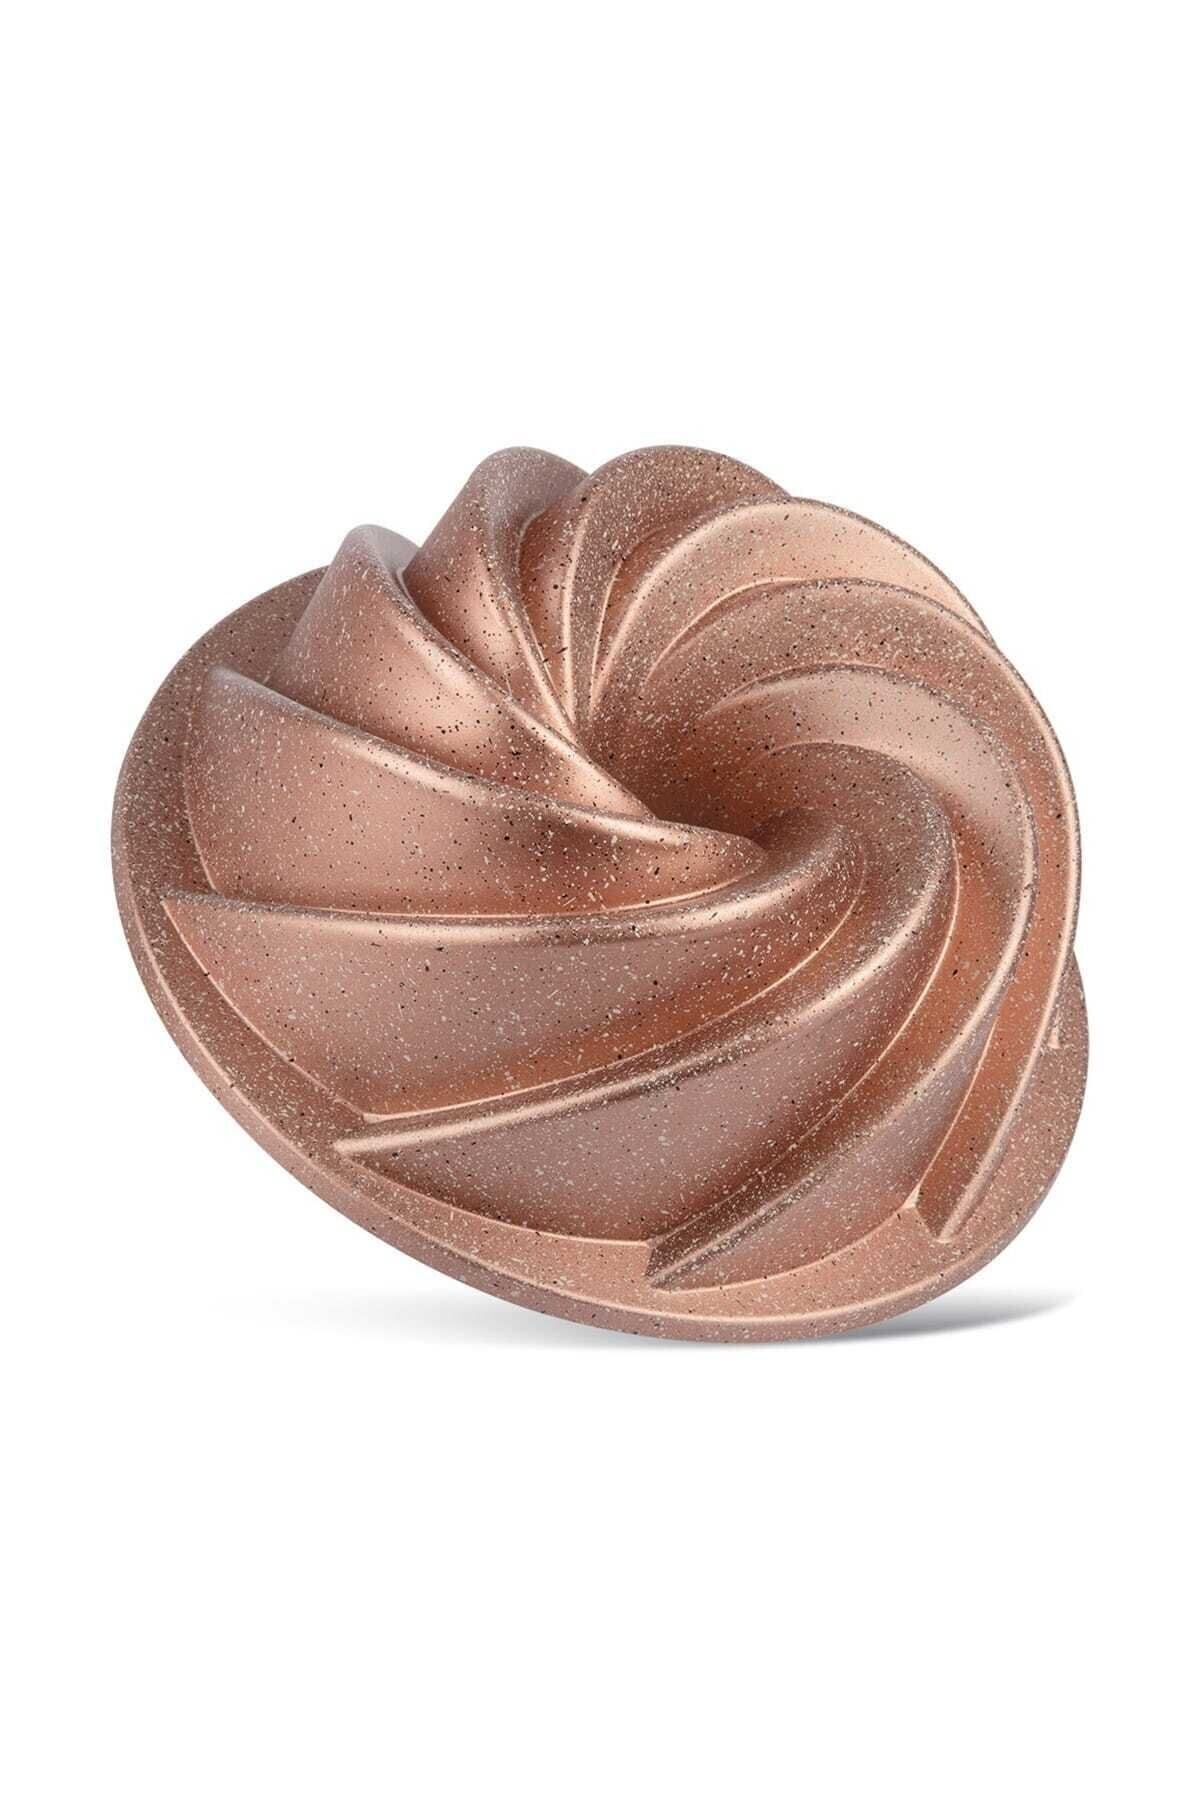 ThermoAD Rose Gold Rüzgar Gülü Granit Kek Kalıbı